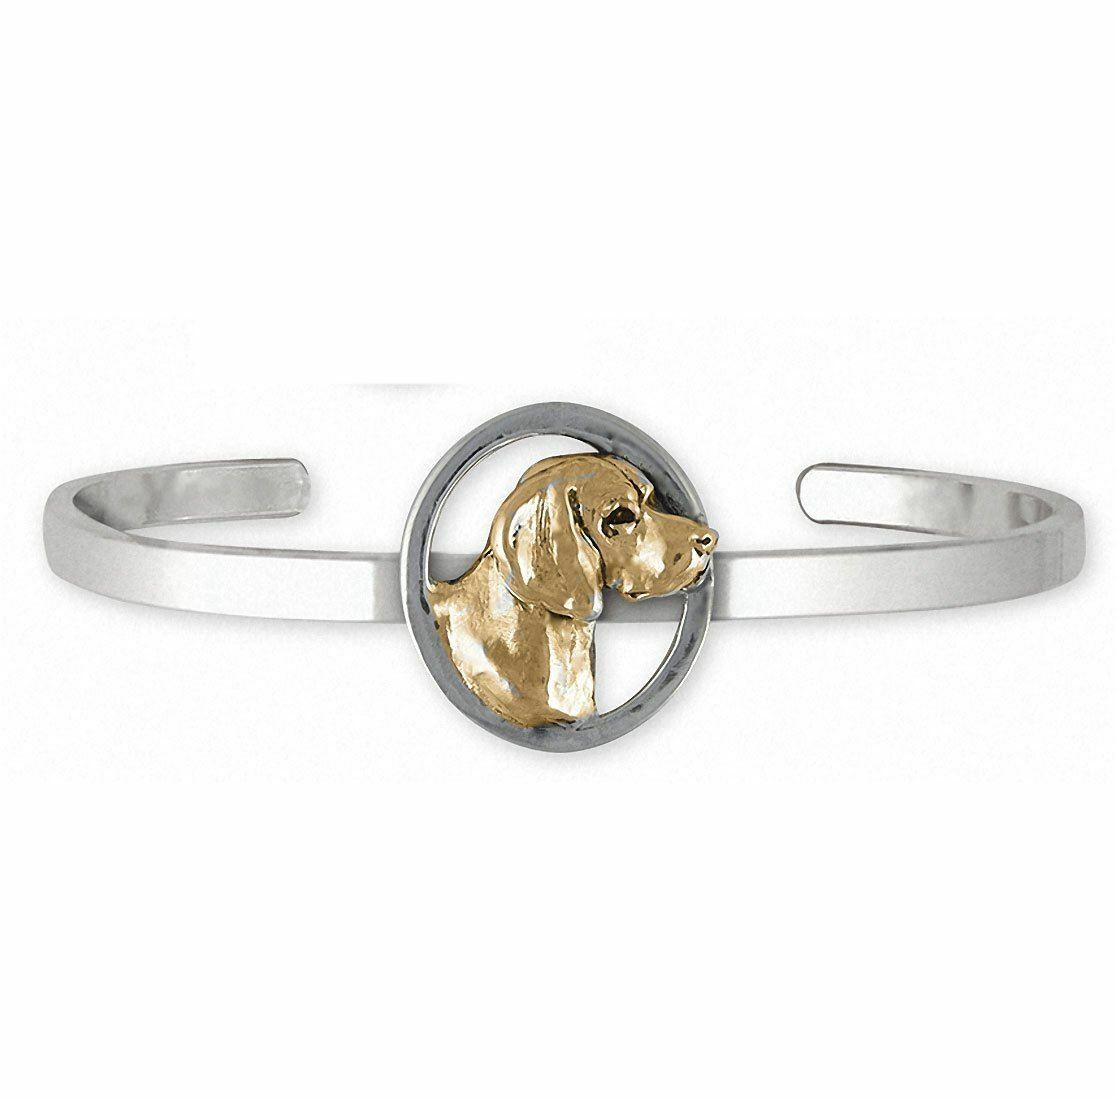 Beagle Jewelry Silver And Gold Beagle Bracelet Handmade Dog Jewelry BG13-TNCB